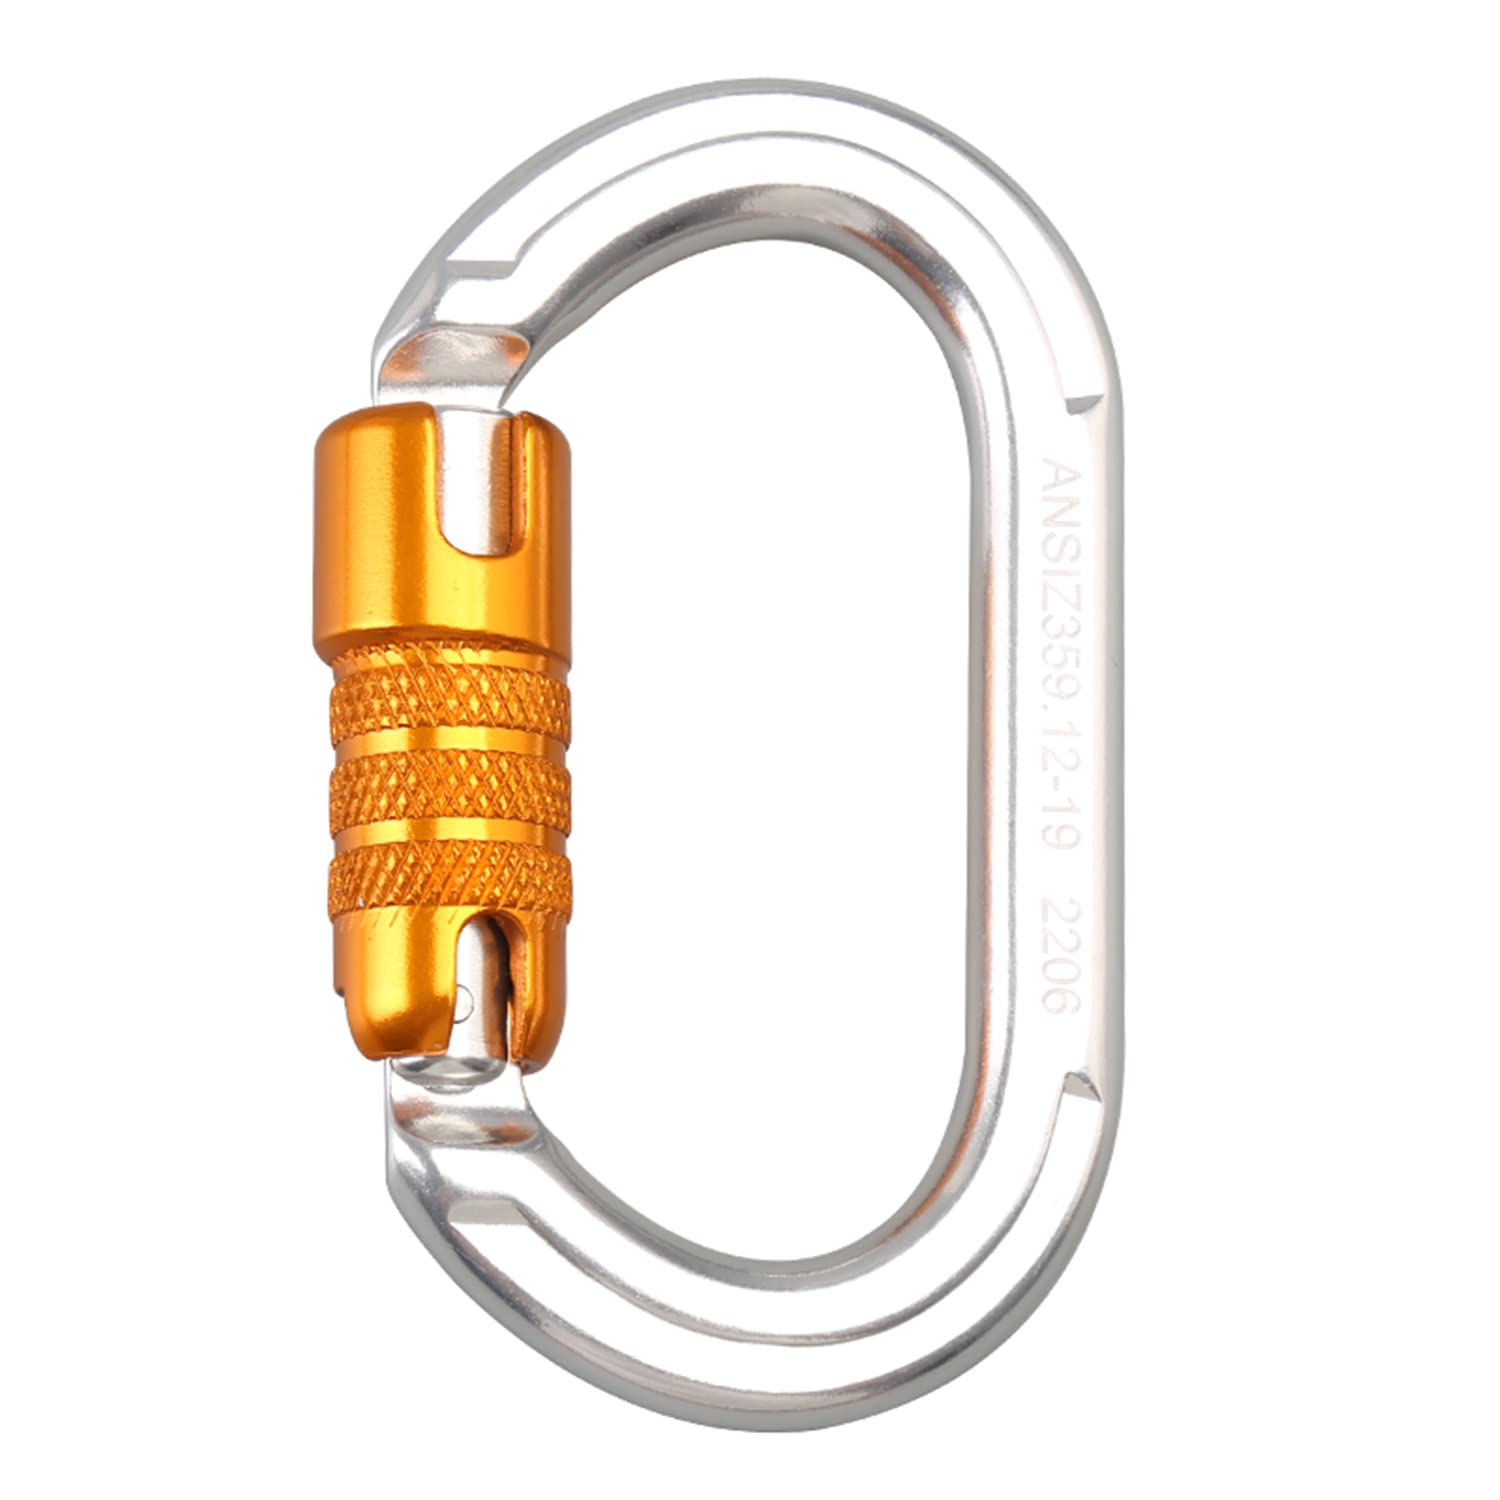 Hard Polymer D-Ring Carabiners (7 colors) – DoorJamm